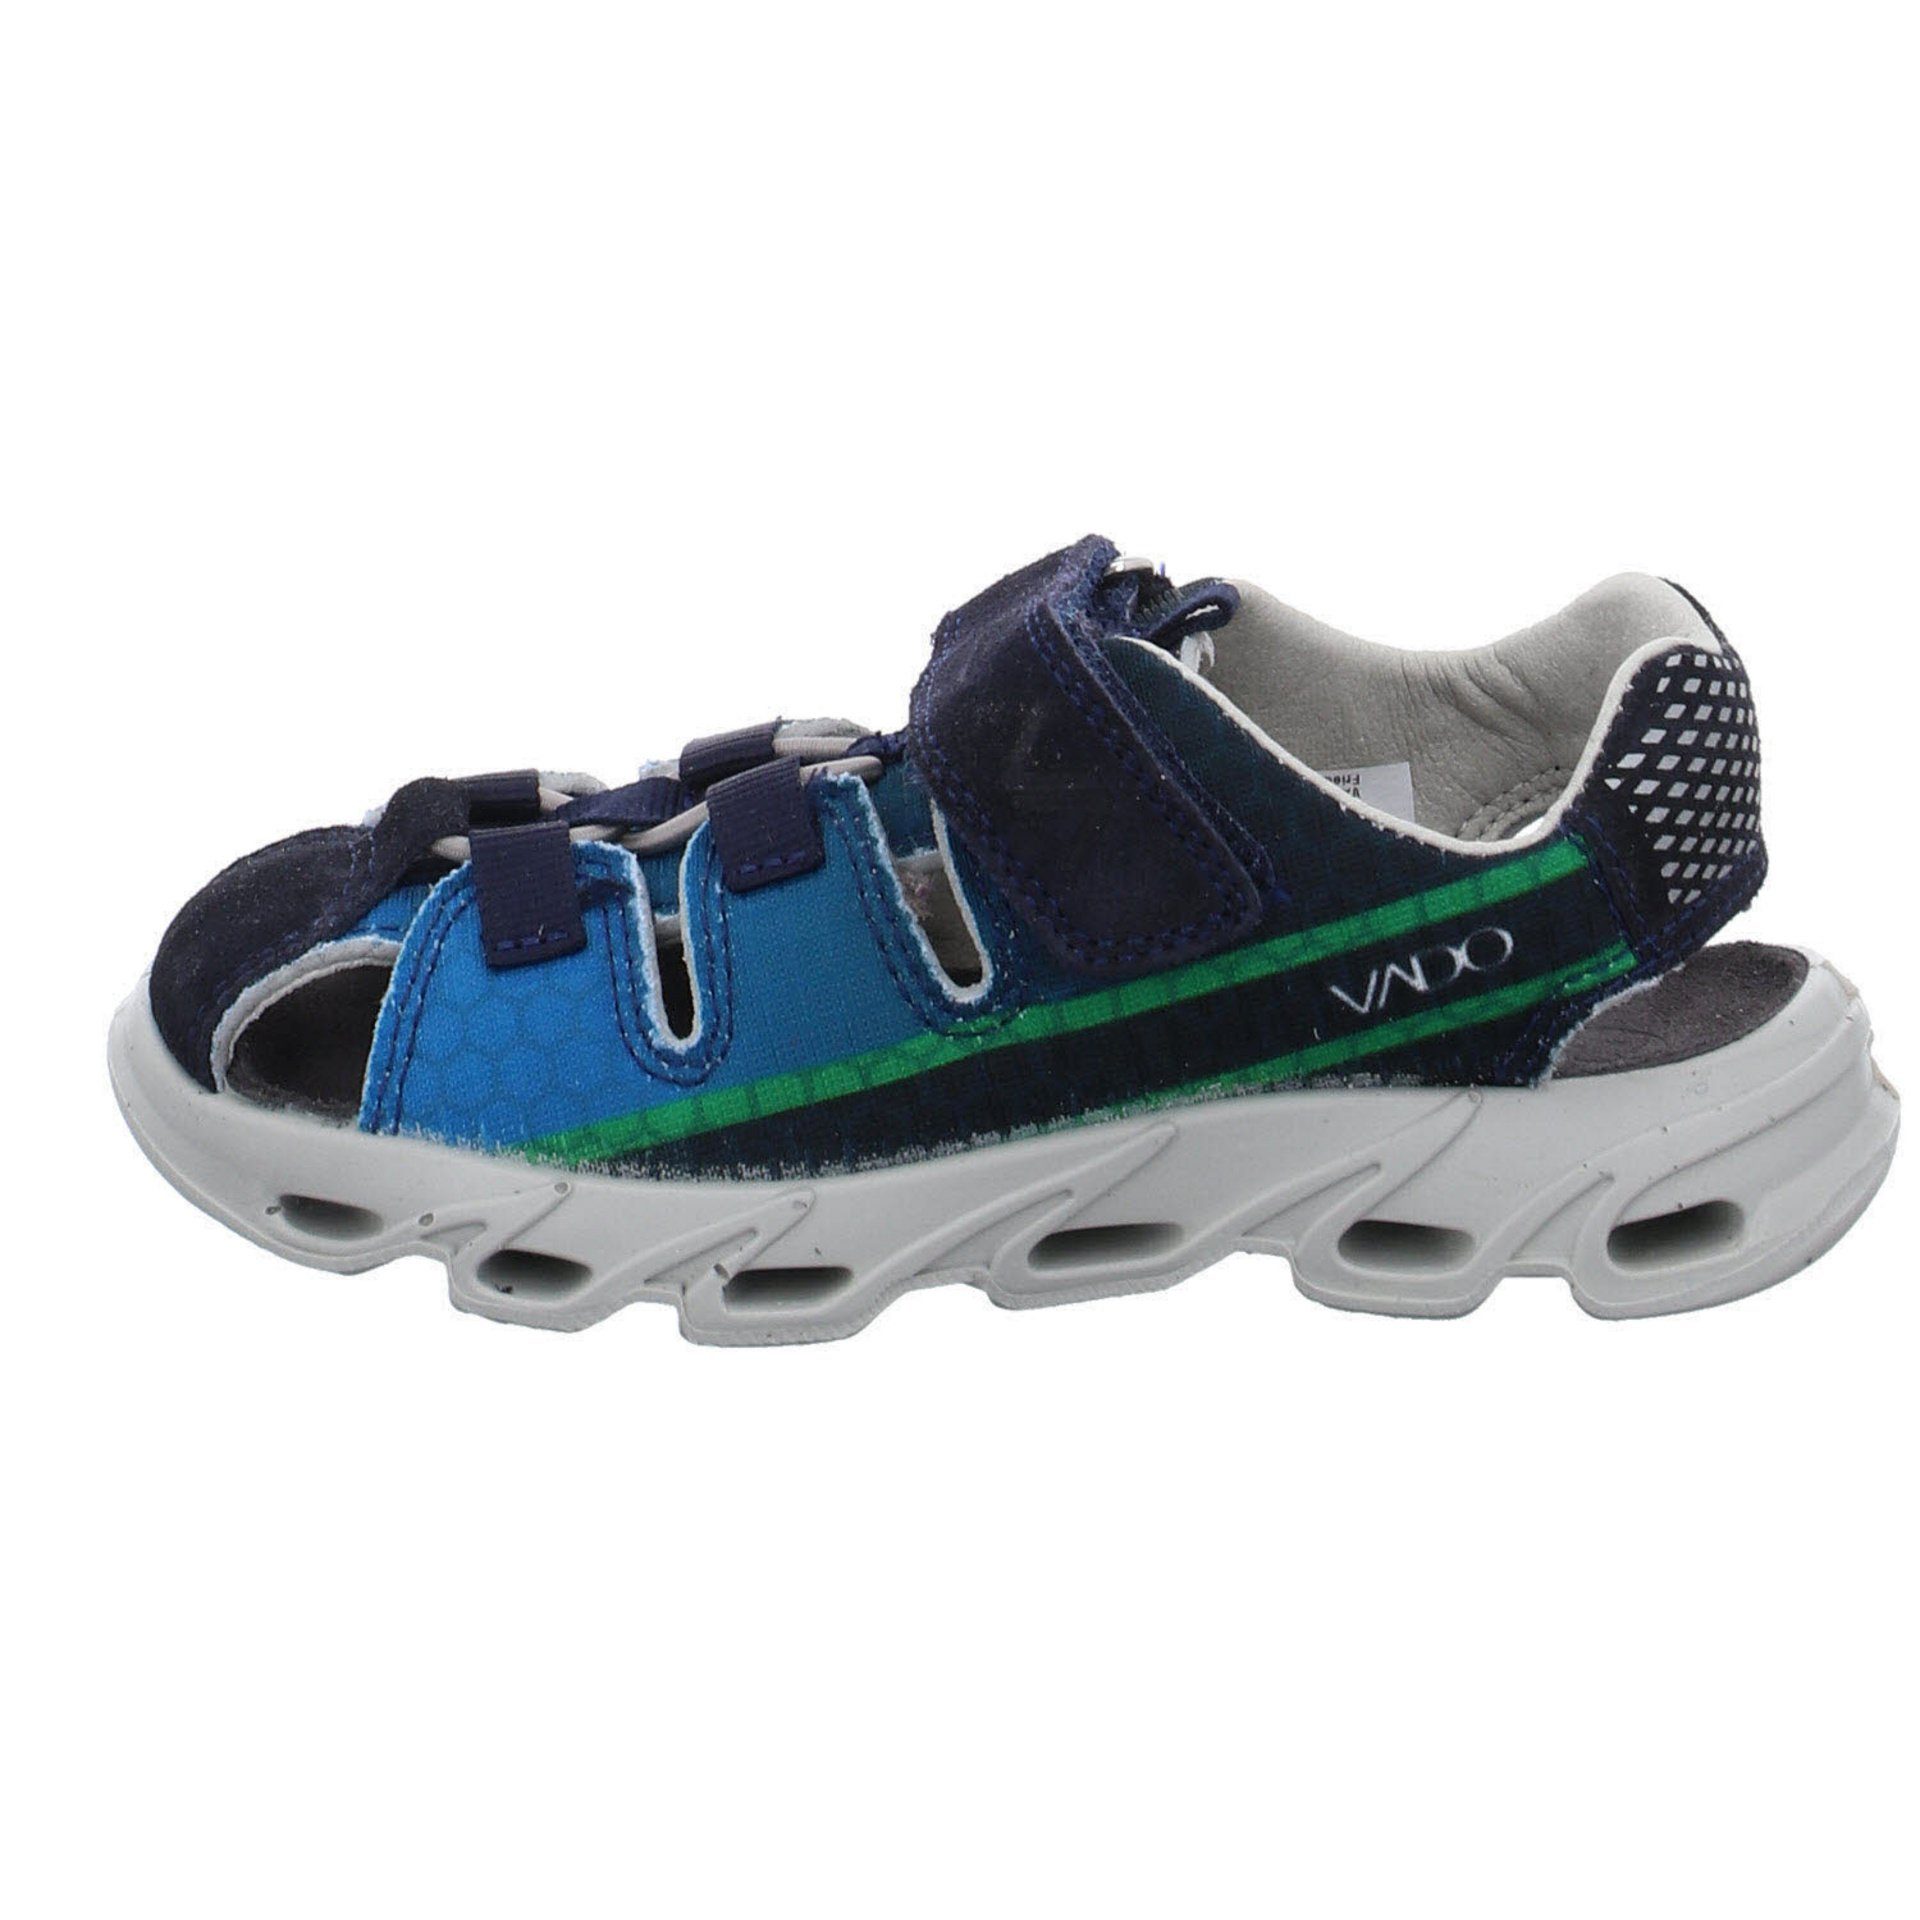 Sandale Vado Jungen Blau Textil Schuhe Kinderschuhe Sandale Sandalen Box